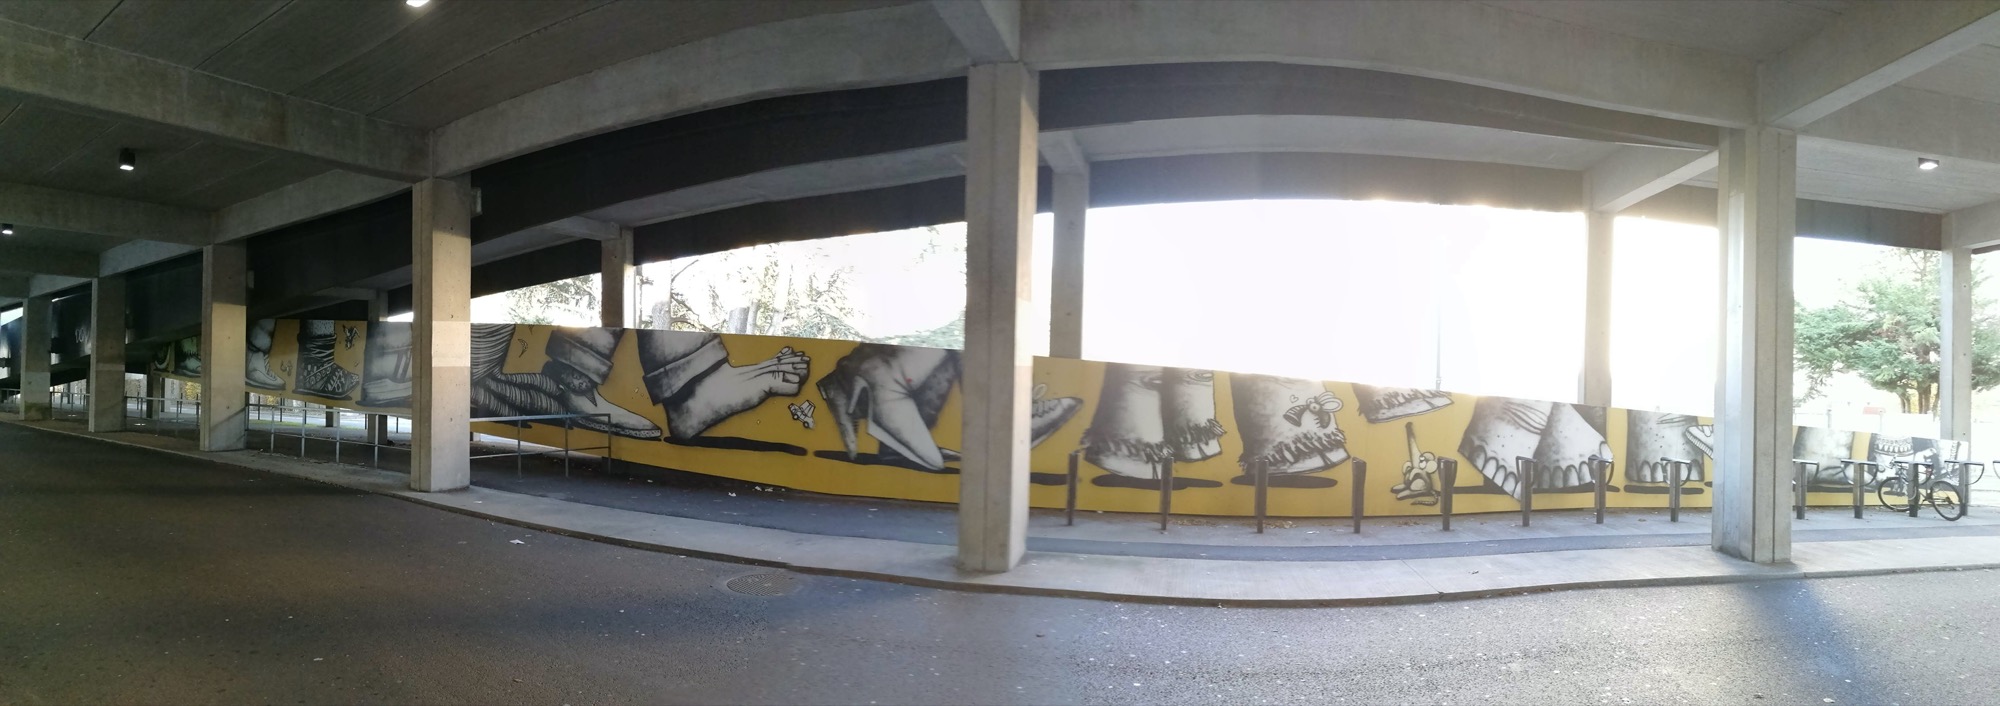 Graffiti 567  by the artist Semor captured by Rabot in Saint-Herblain France